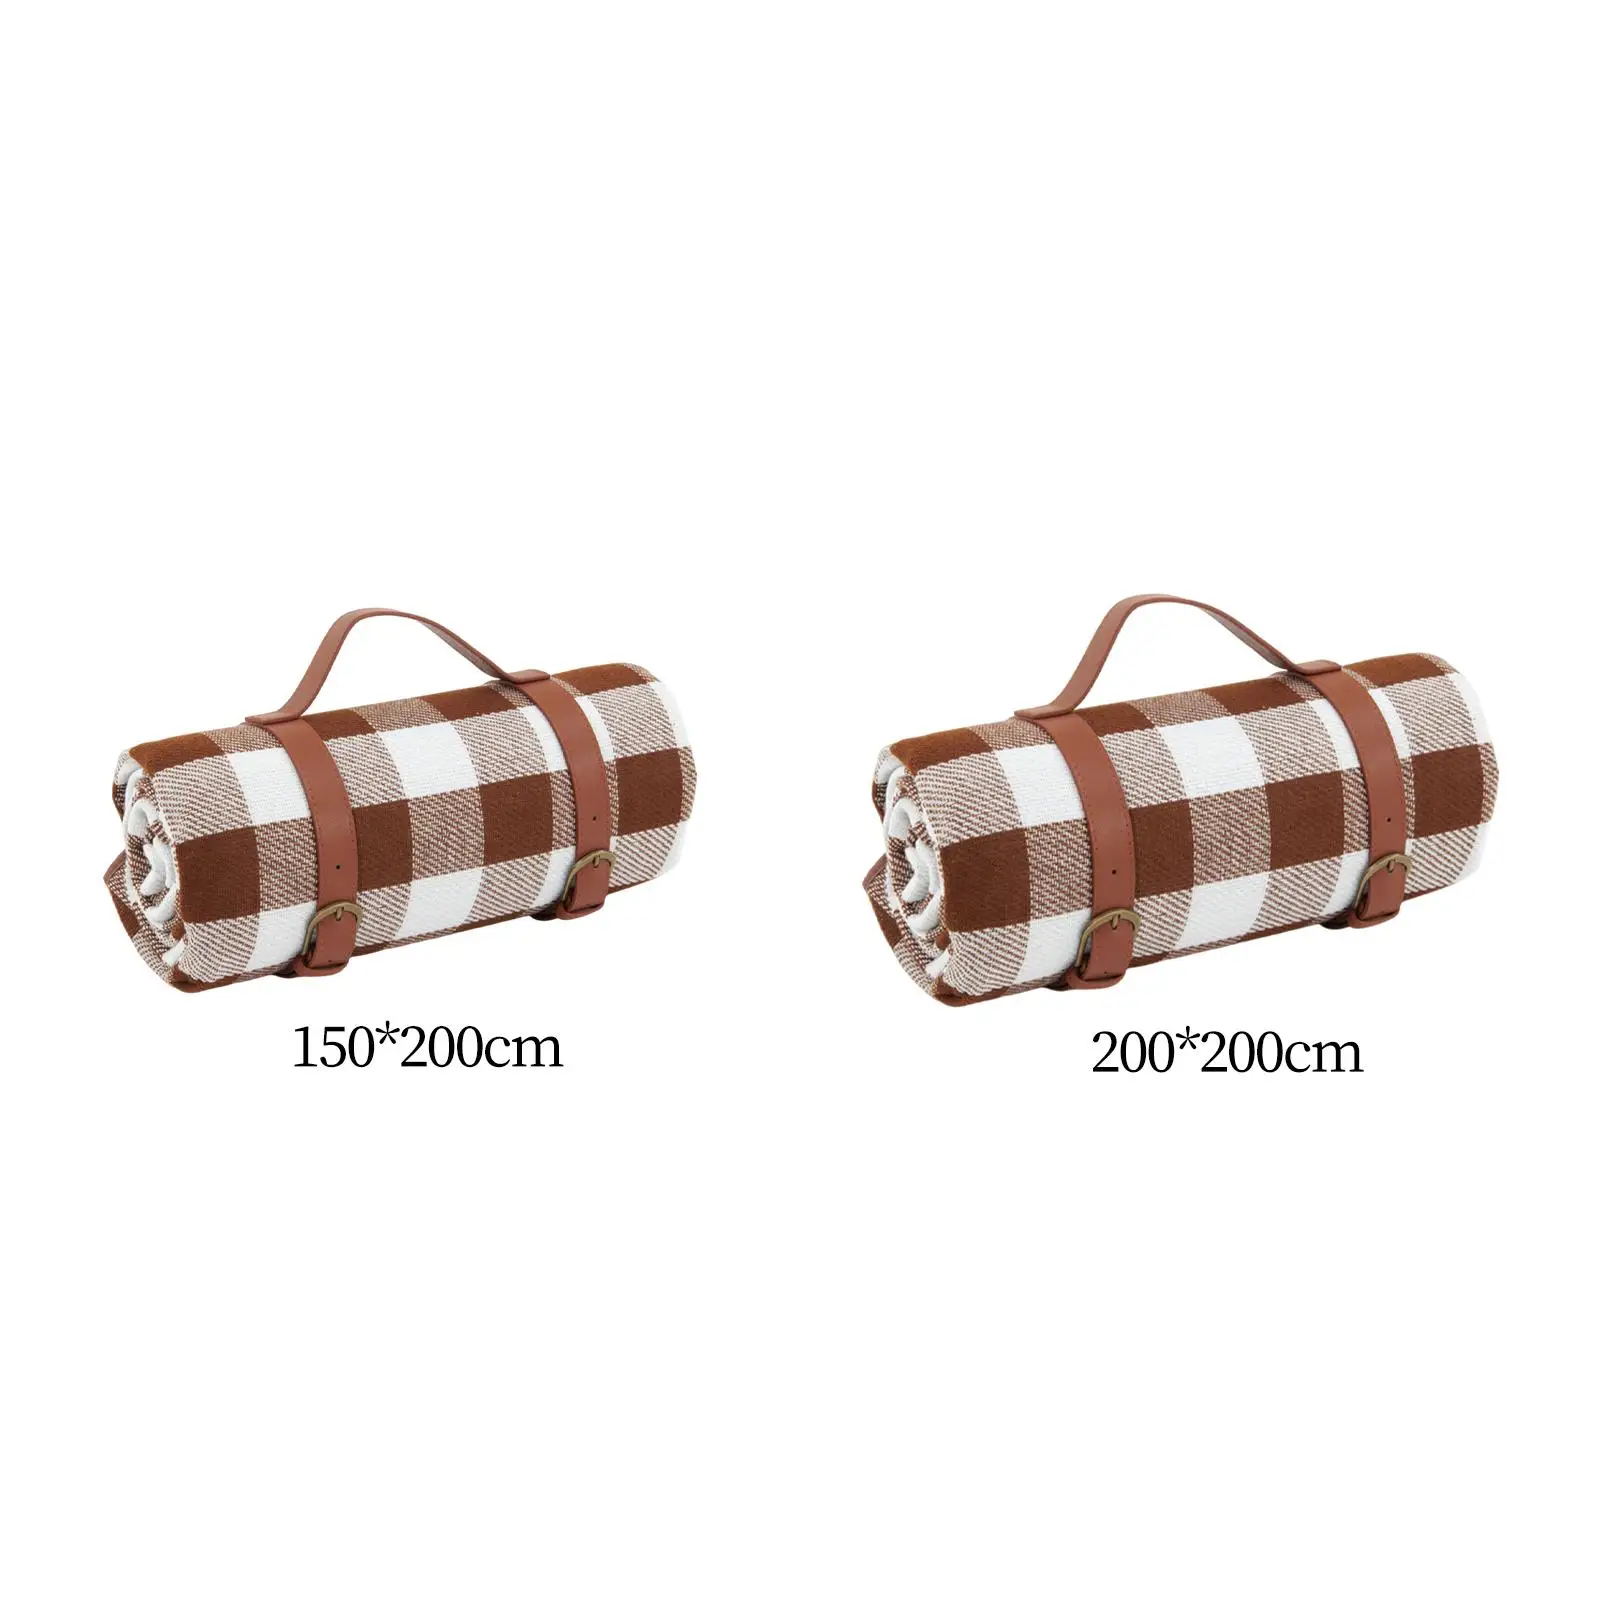 Picnic Blanket PU Leather Handle Outdoor Blanket Picnic Mat Waterproof Rug for